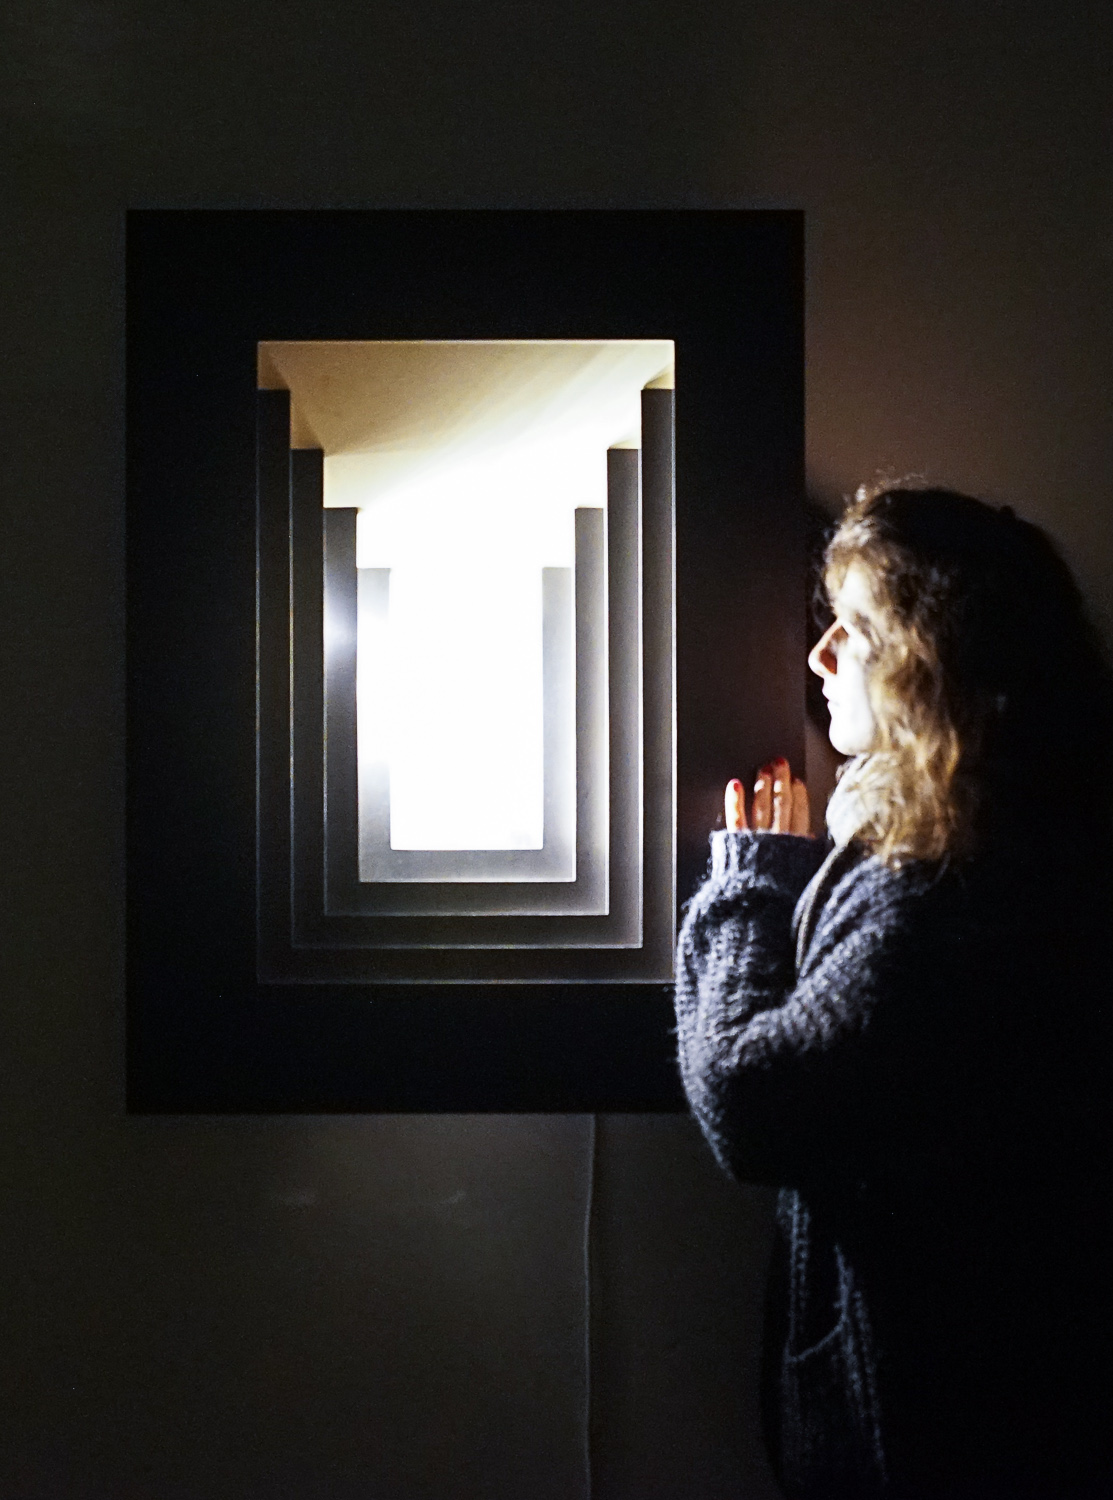 siba sahabi with her lamp perspectives